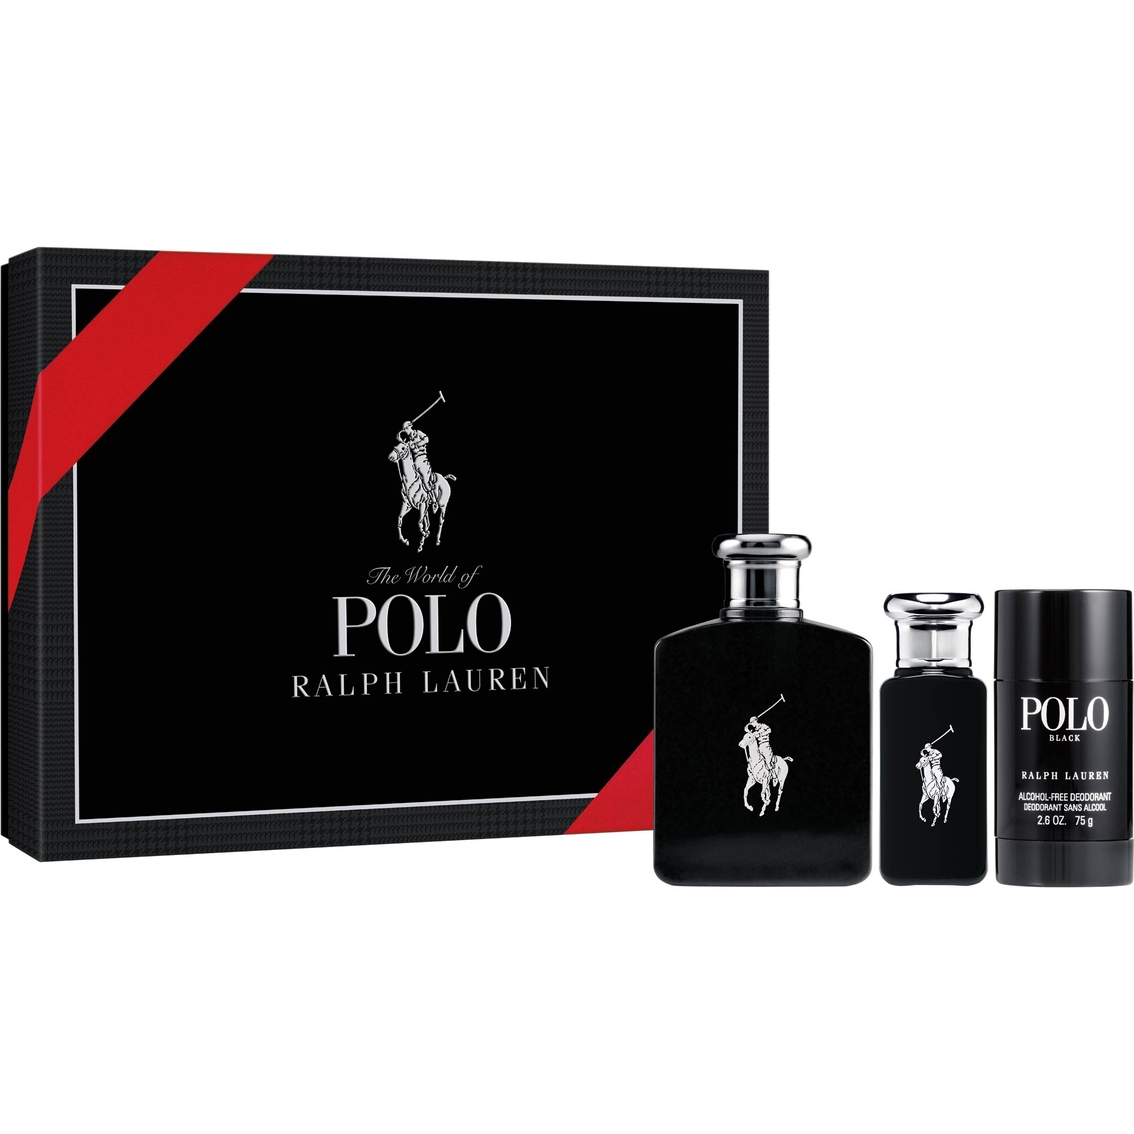 ralph lauren men's fragrance gift set